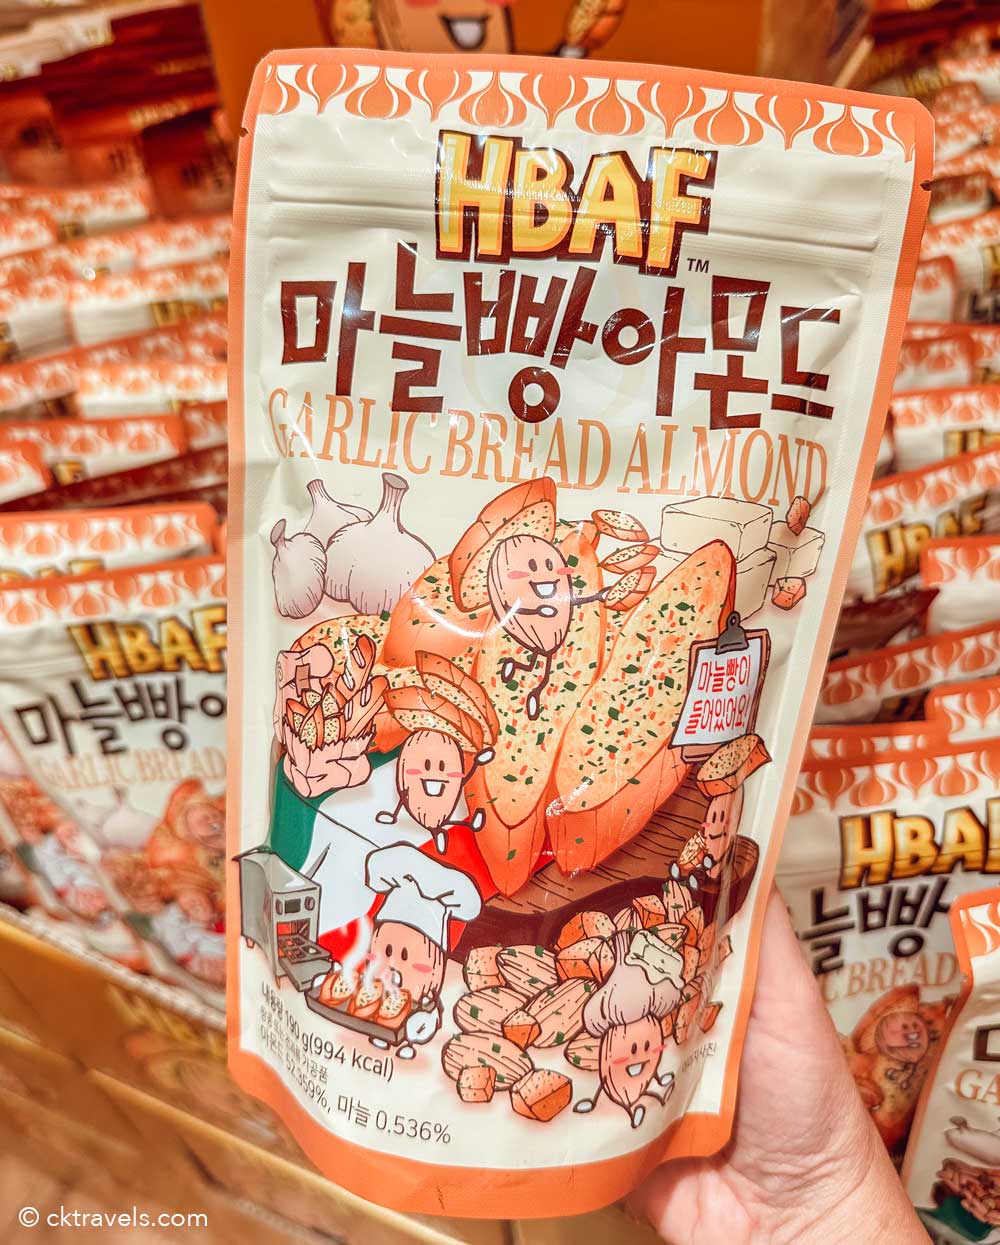 HBAF garlic bread Almonds south korea